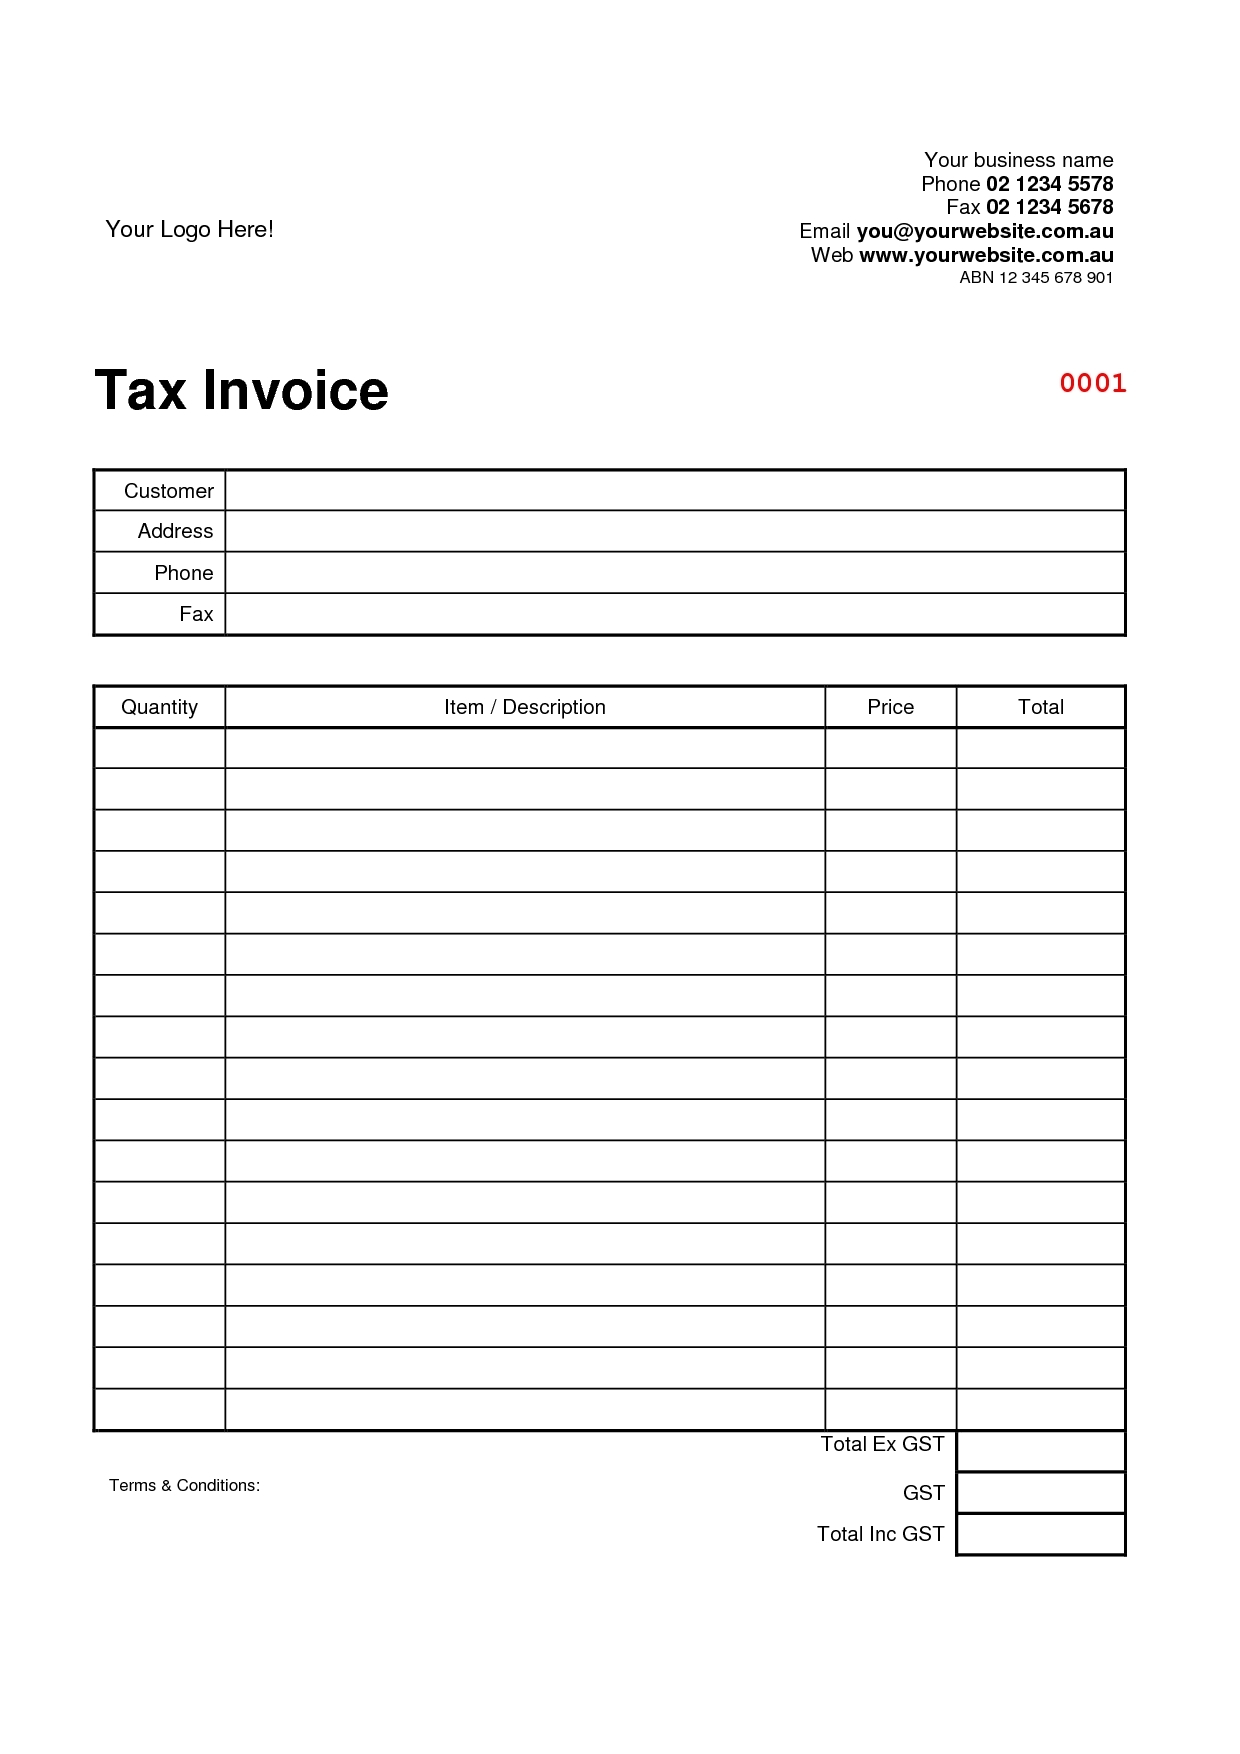 free tax invoice template australia invoice template free 2016 tax invoice template australia